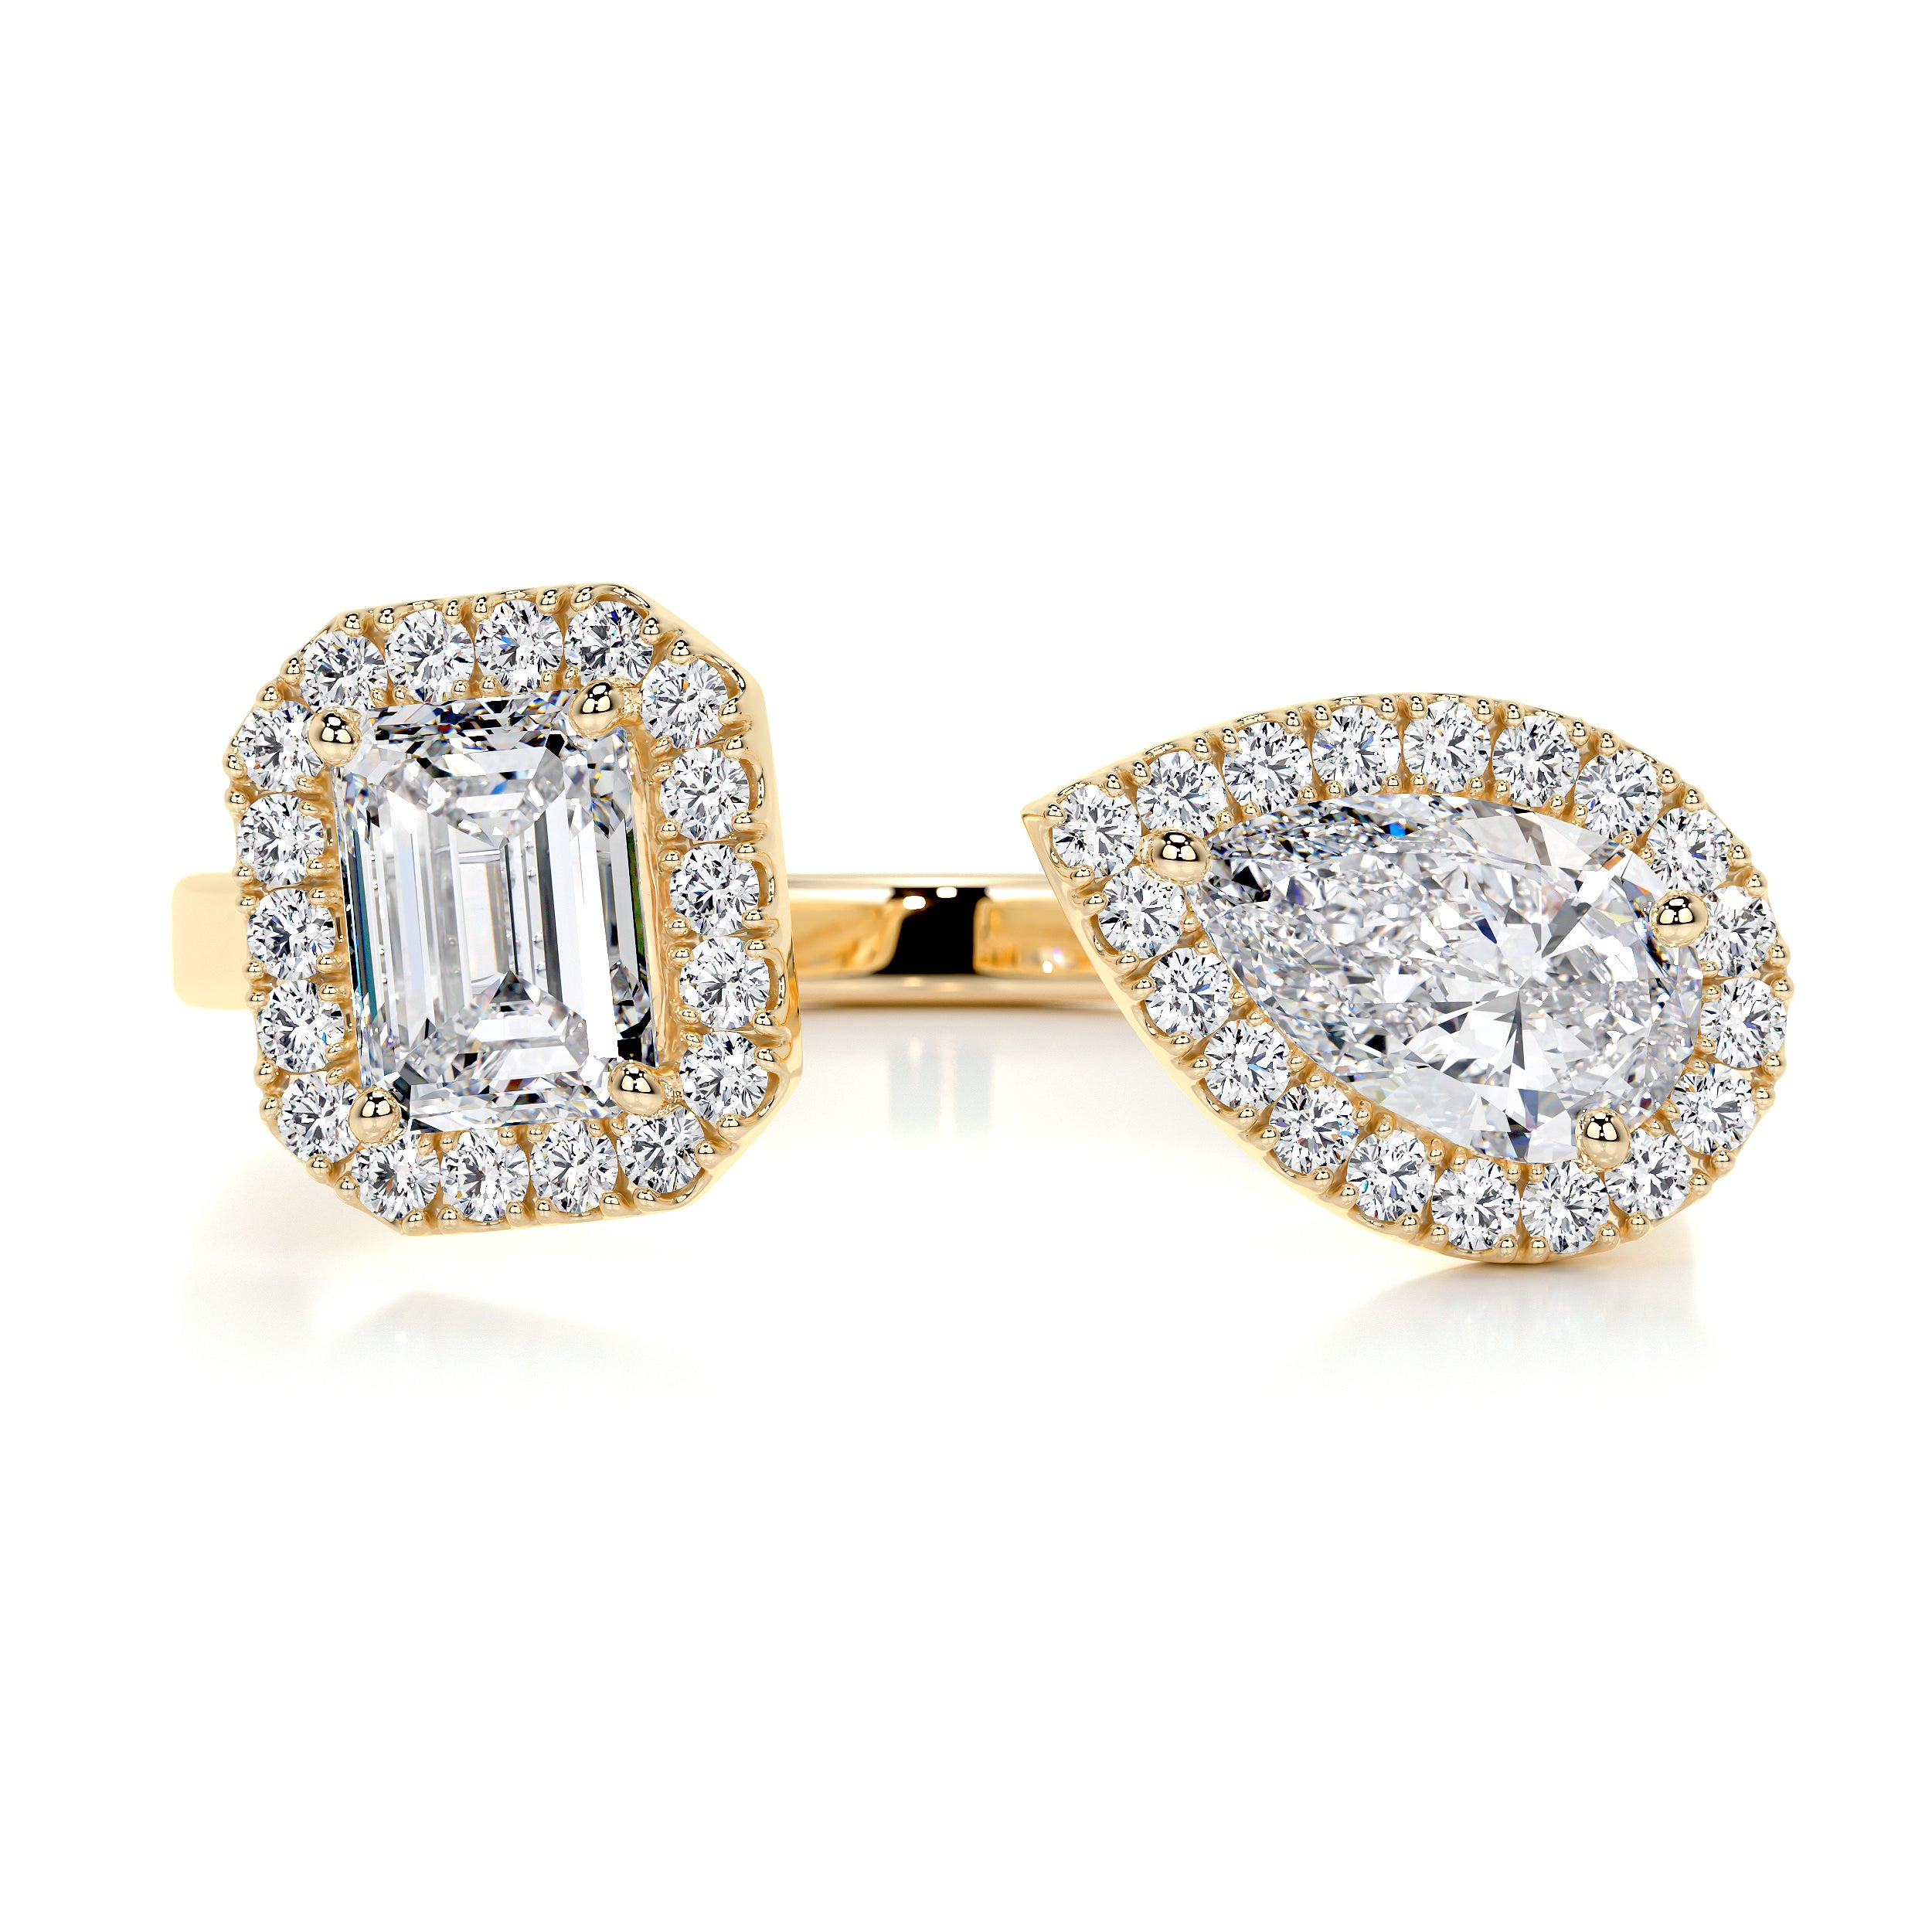 Edith Designer Diamond Ring   (1.2 Carat) -18K Yellow Gold